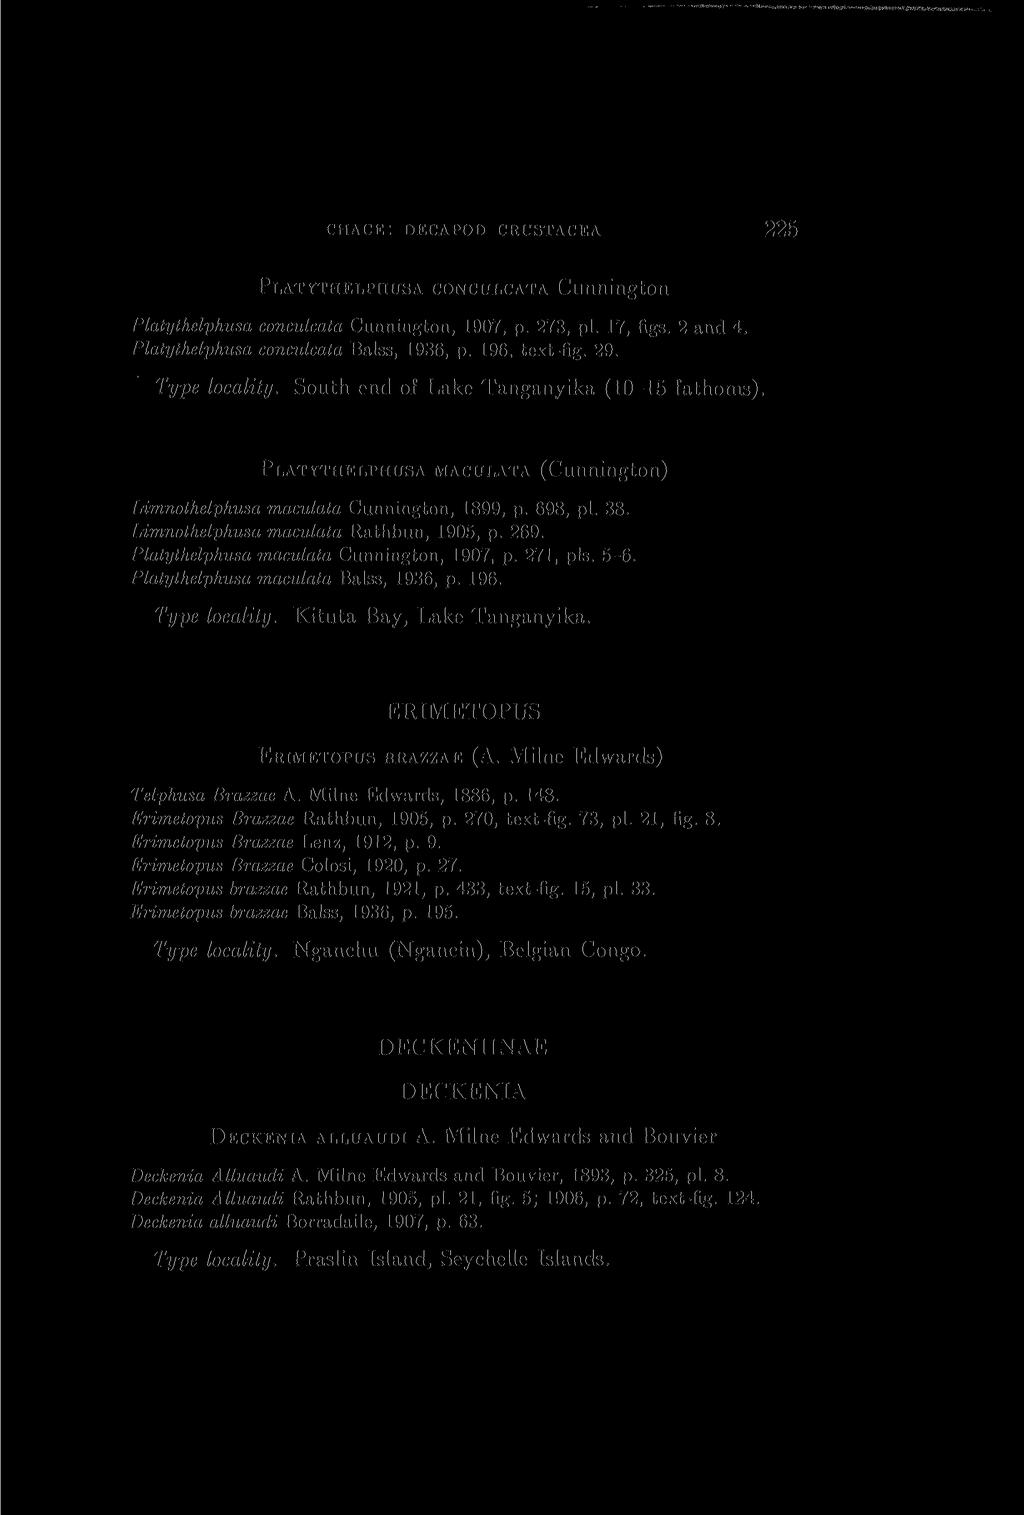 CHACE: DECAPOD CRUSTACEA PLATYTHELPHUSA CONCULCATA Cunnington Platythelphusa conculcata Cunnington, 1907, p. 273, pi. 17, figs. 2 and 4. Platythelphusa conculcata Balss, 1936, p. 196, text-fig. 29.